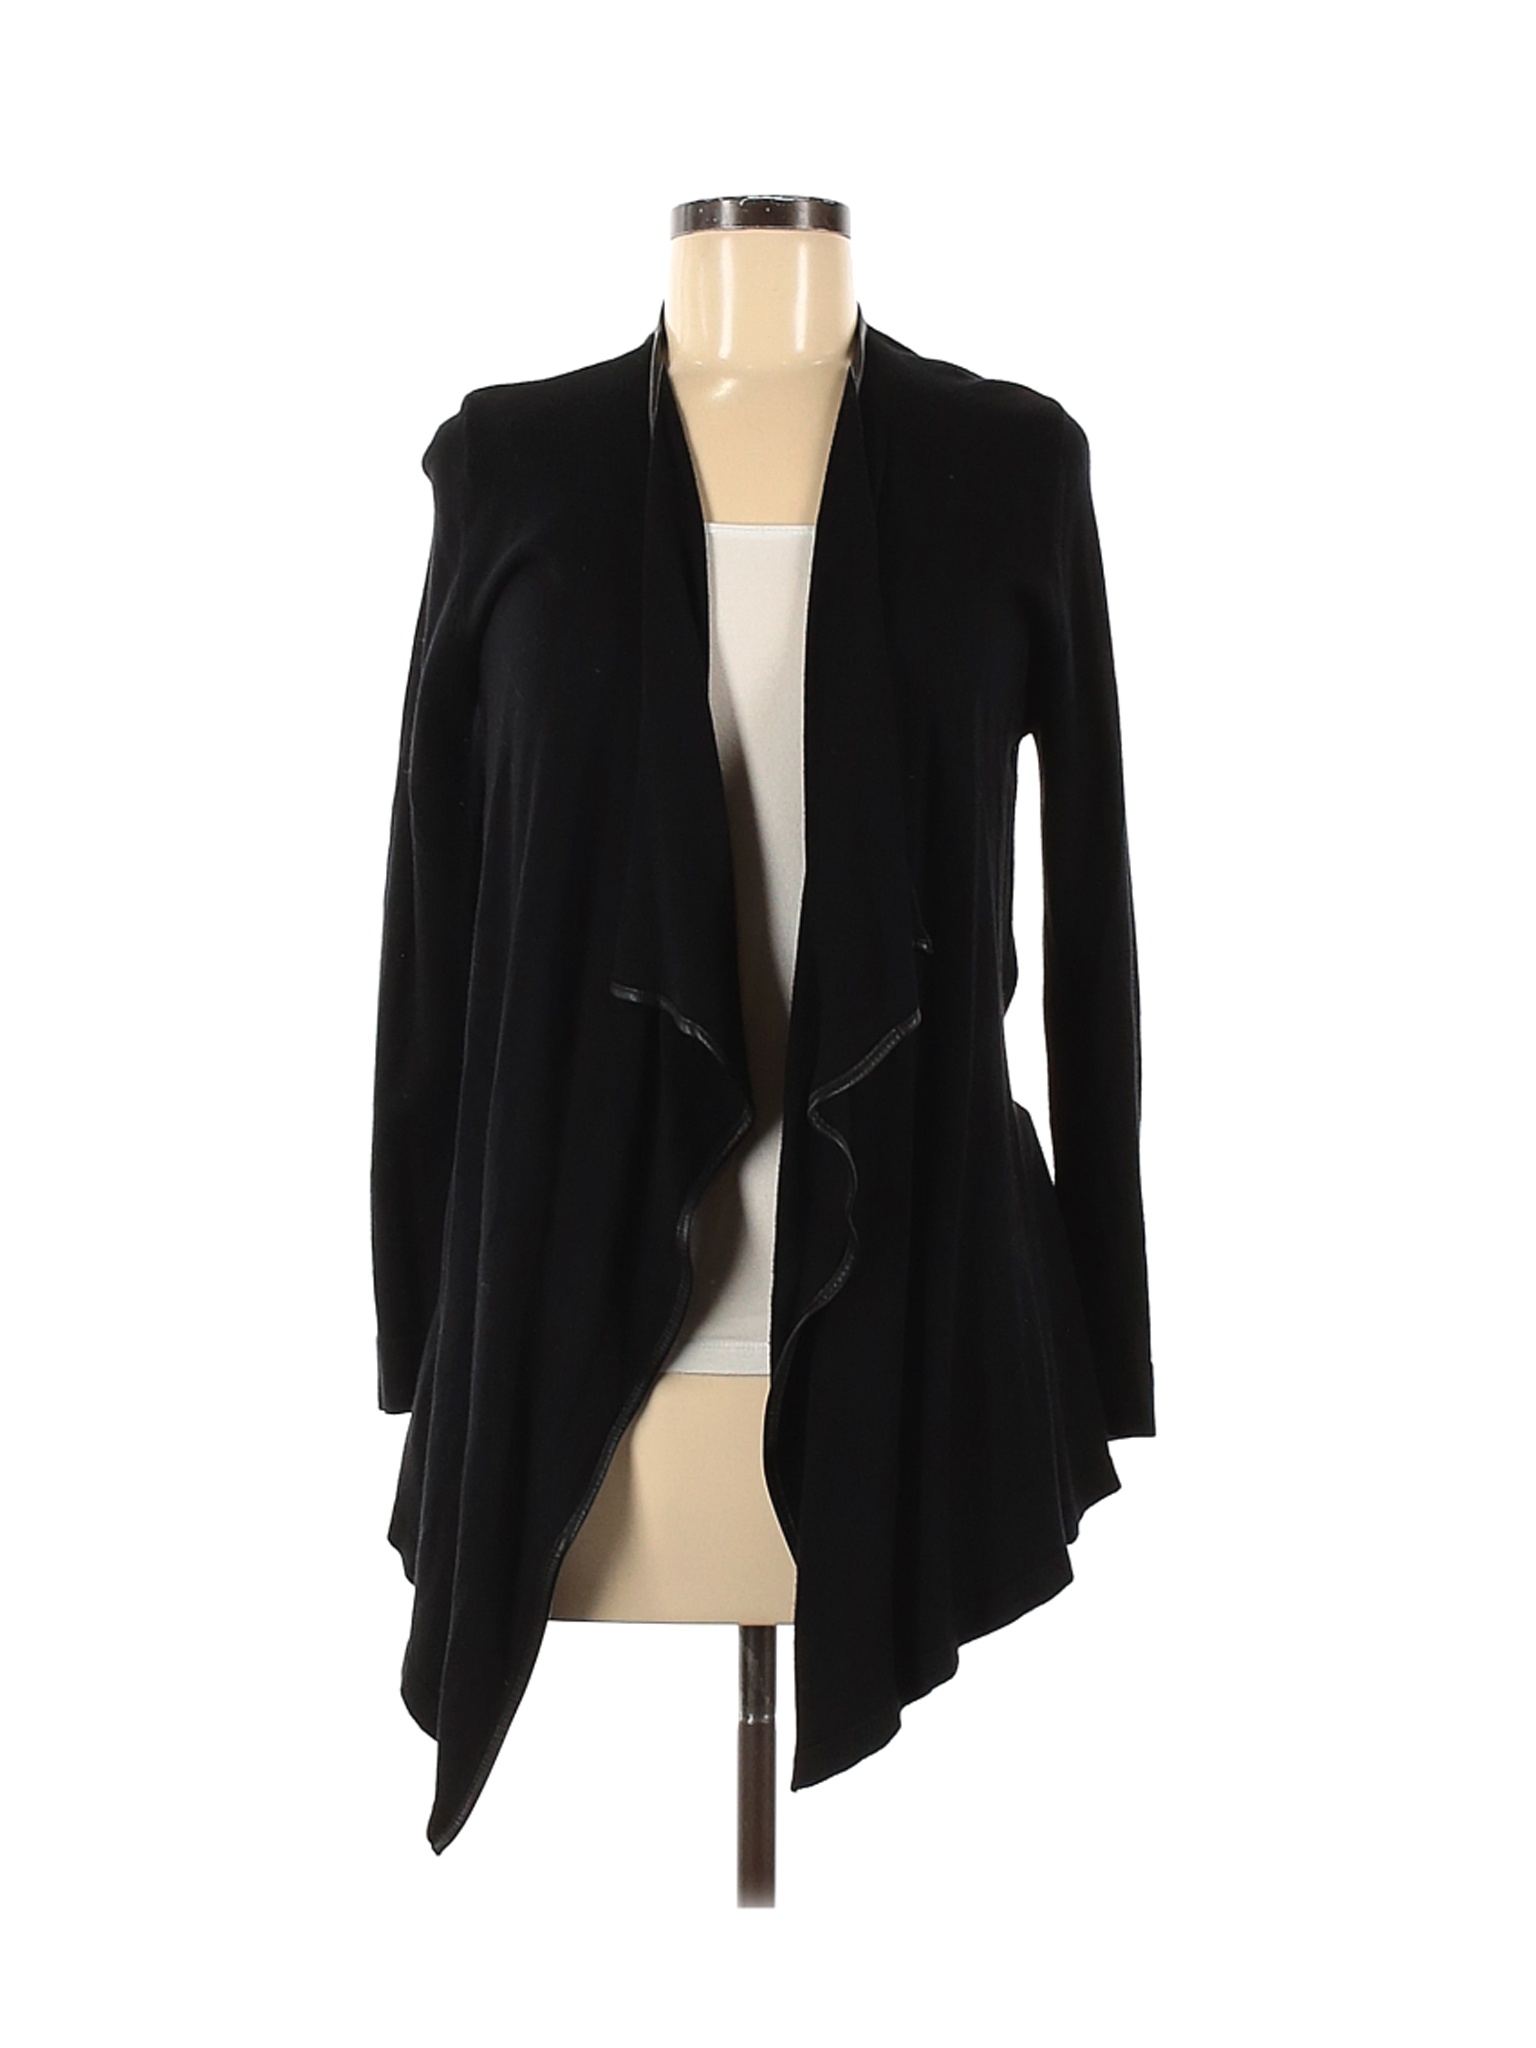 Zara Women Black Cardigan M | eBay